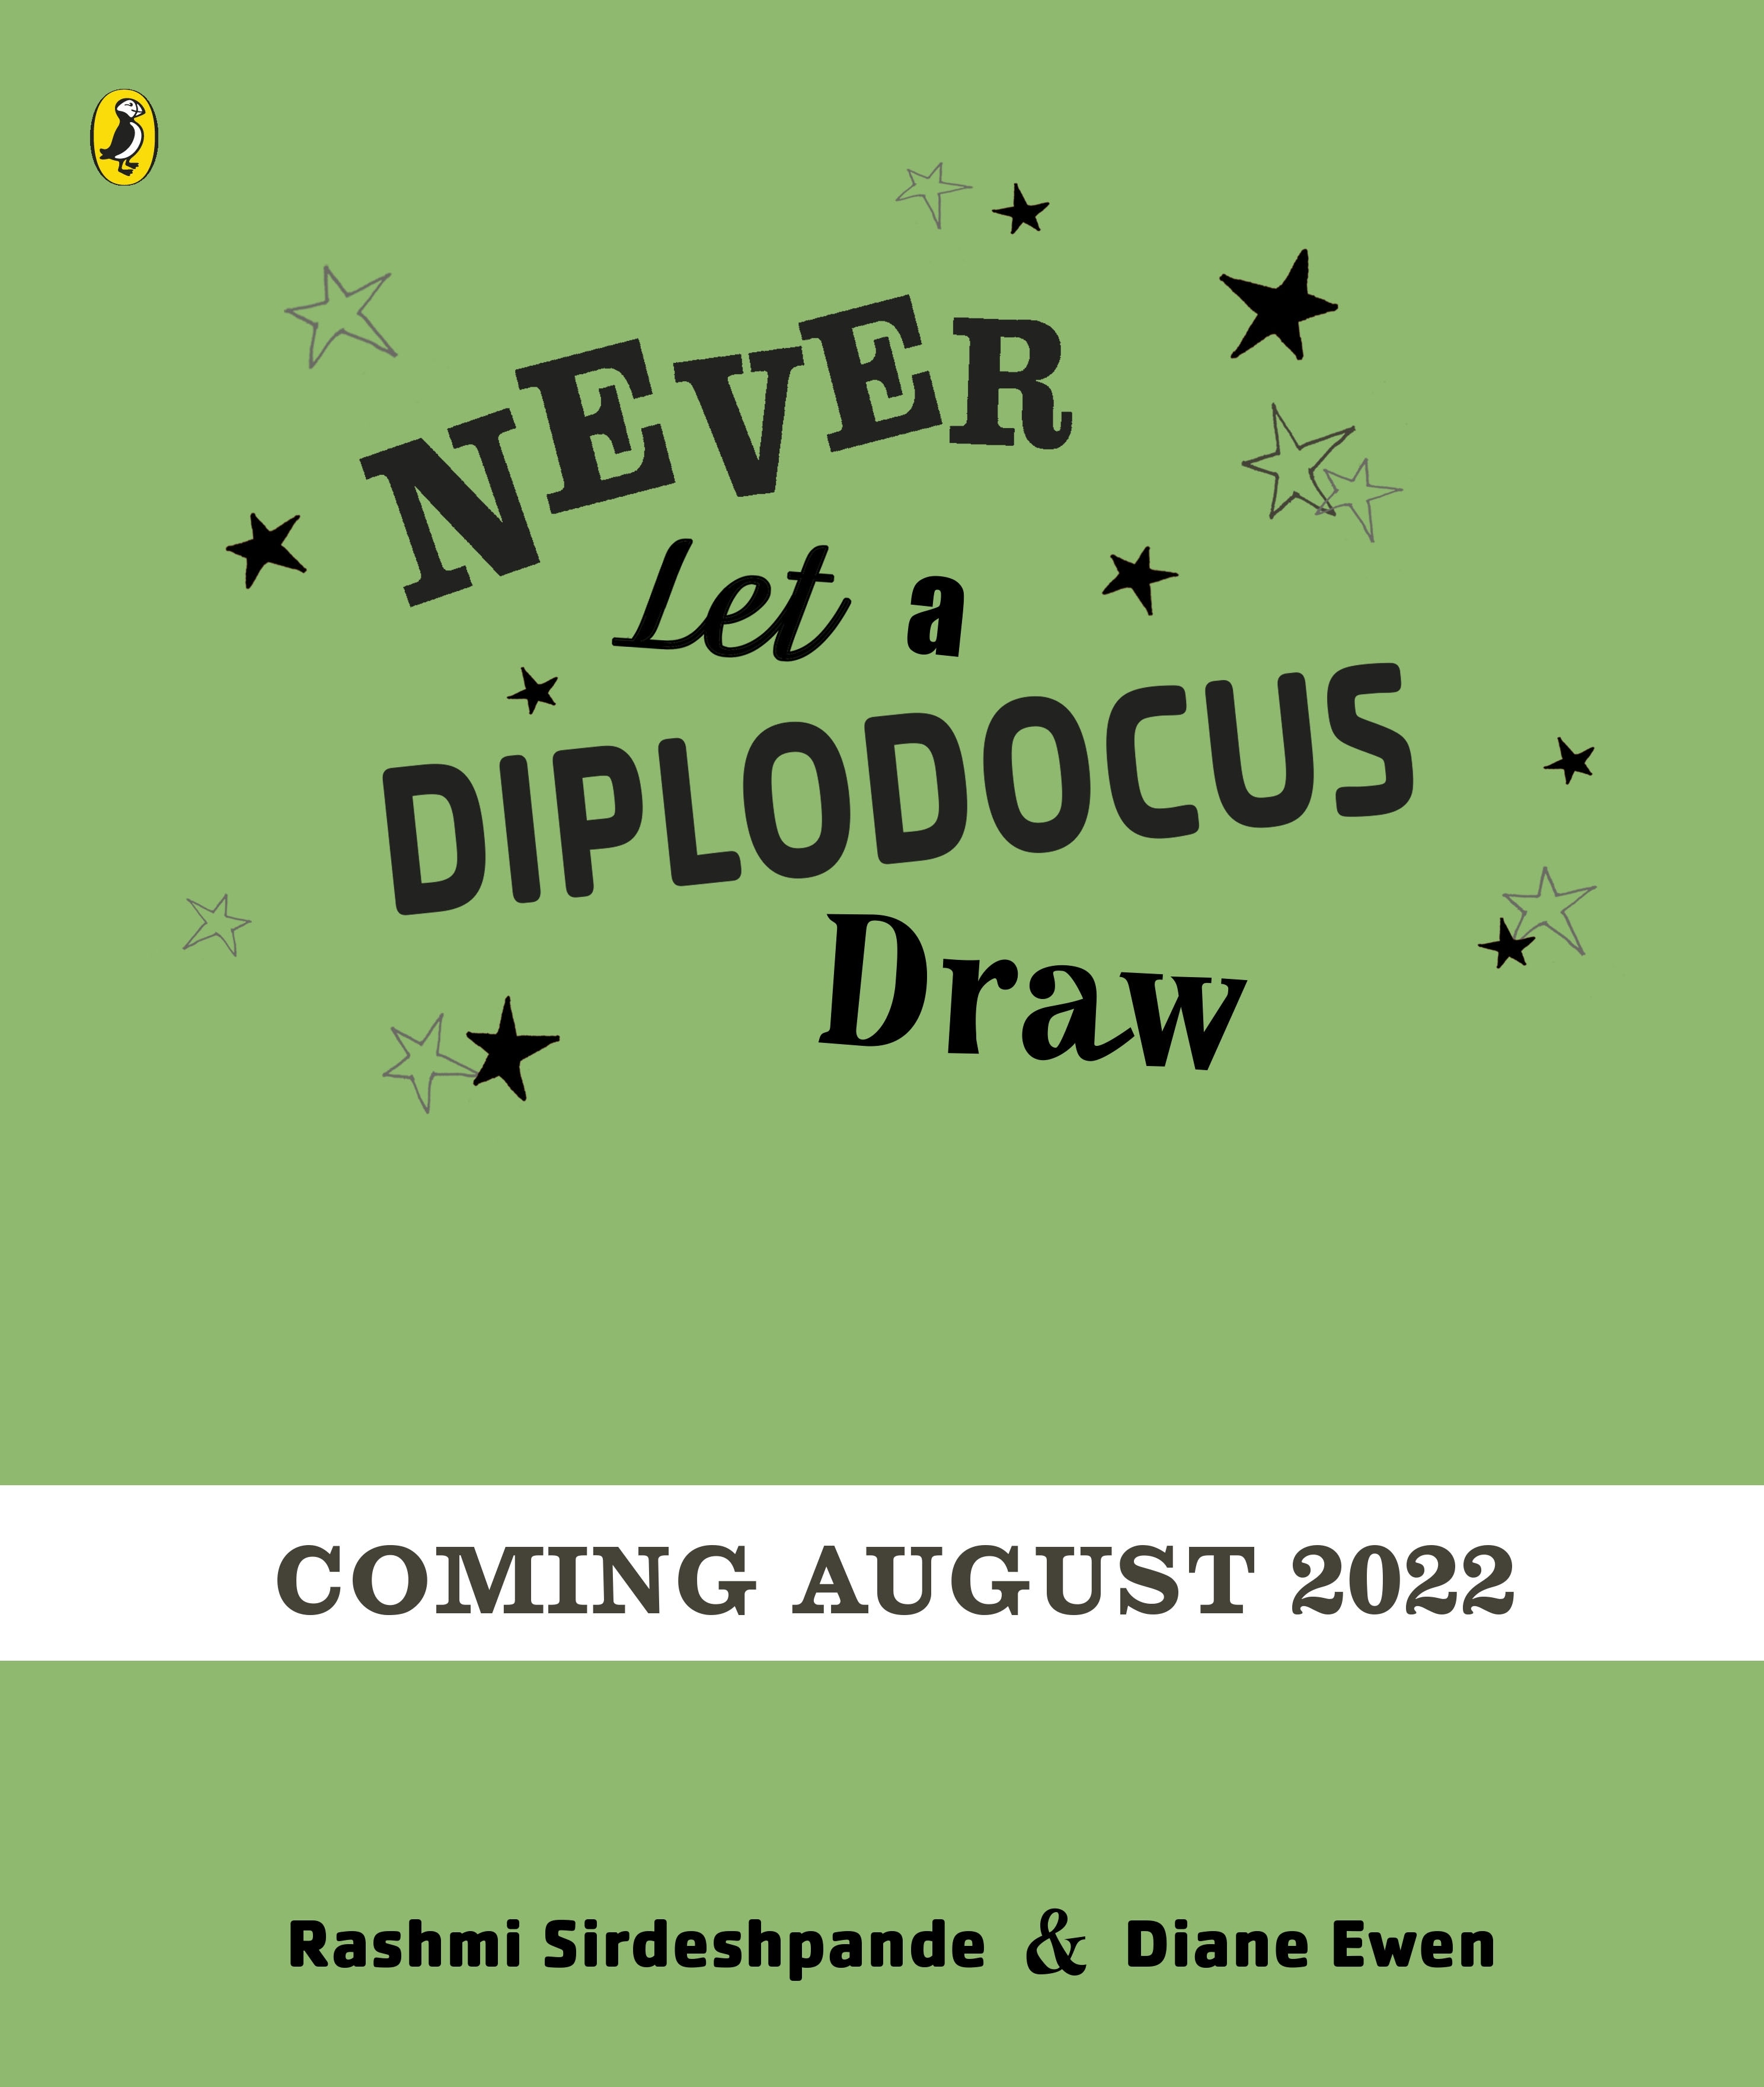 Book “Never Let a Diplodocus Draw” by Rashmi Sirdeshpande — August 18, 2022